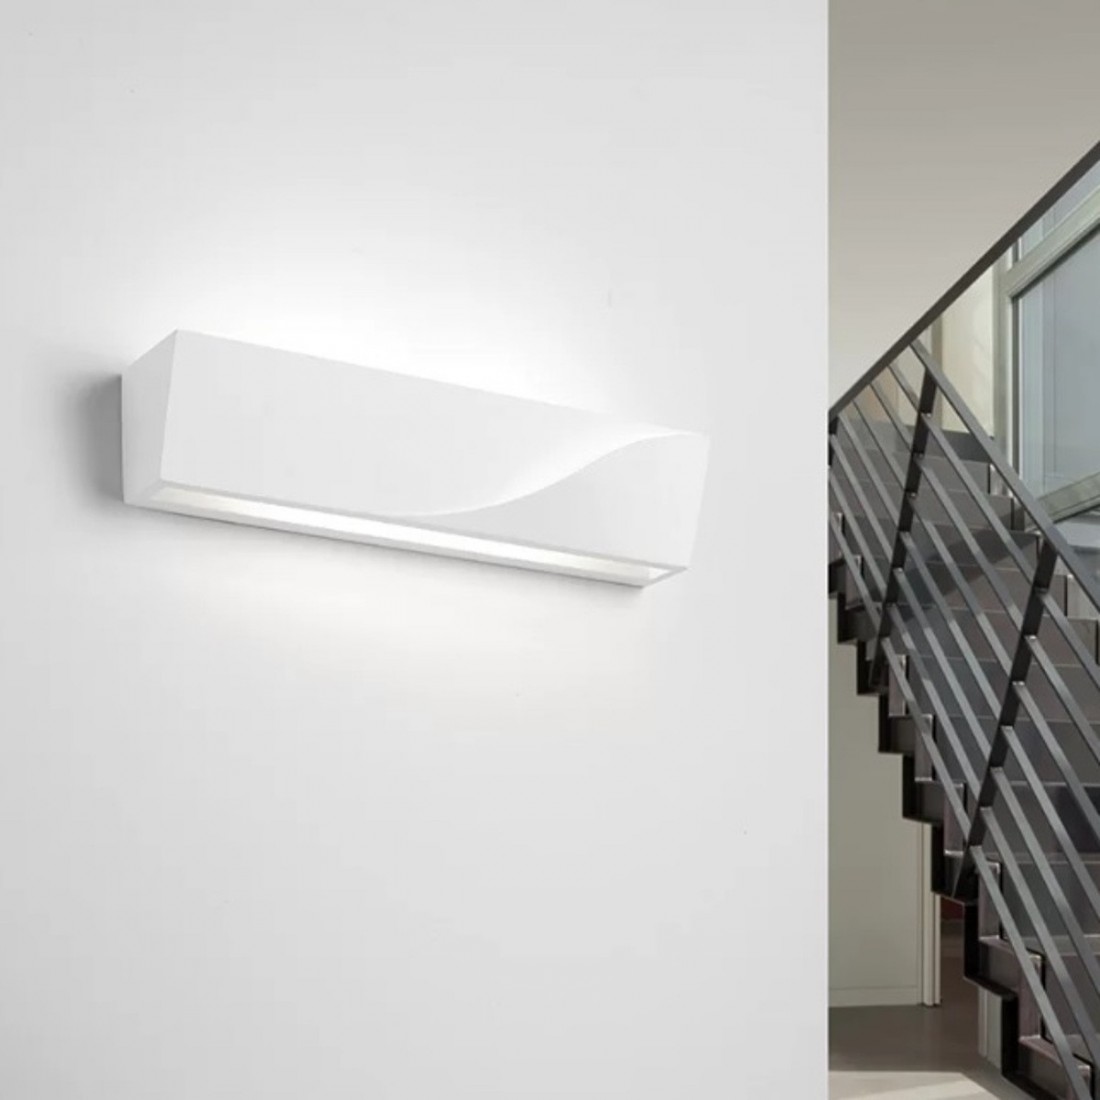 Applique SF-PELLENE T201 G9 LED 35.5CM gesso bianco verniciabile lampada parete biemissione luce indiretta interno